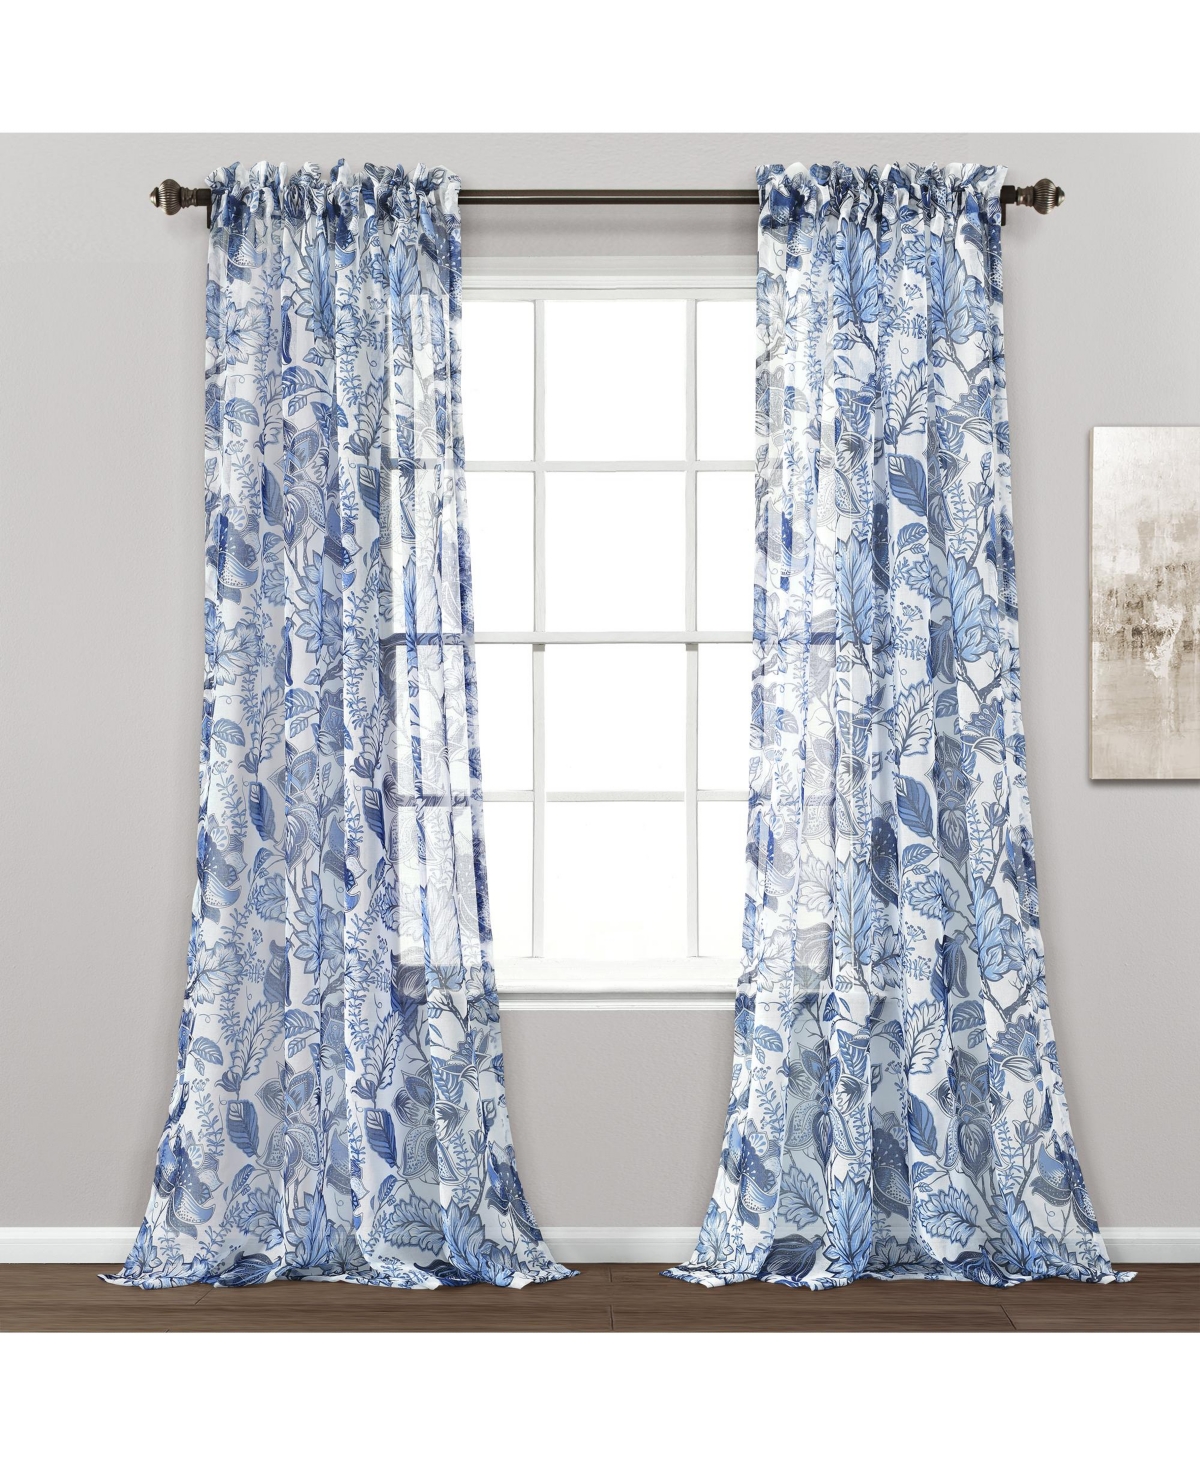 Lush Decor Cynthia Jacobean Sheer Window Curtain Panels Blue 52x84+2 Set